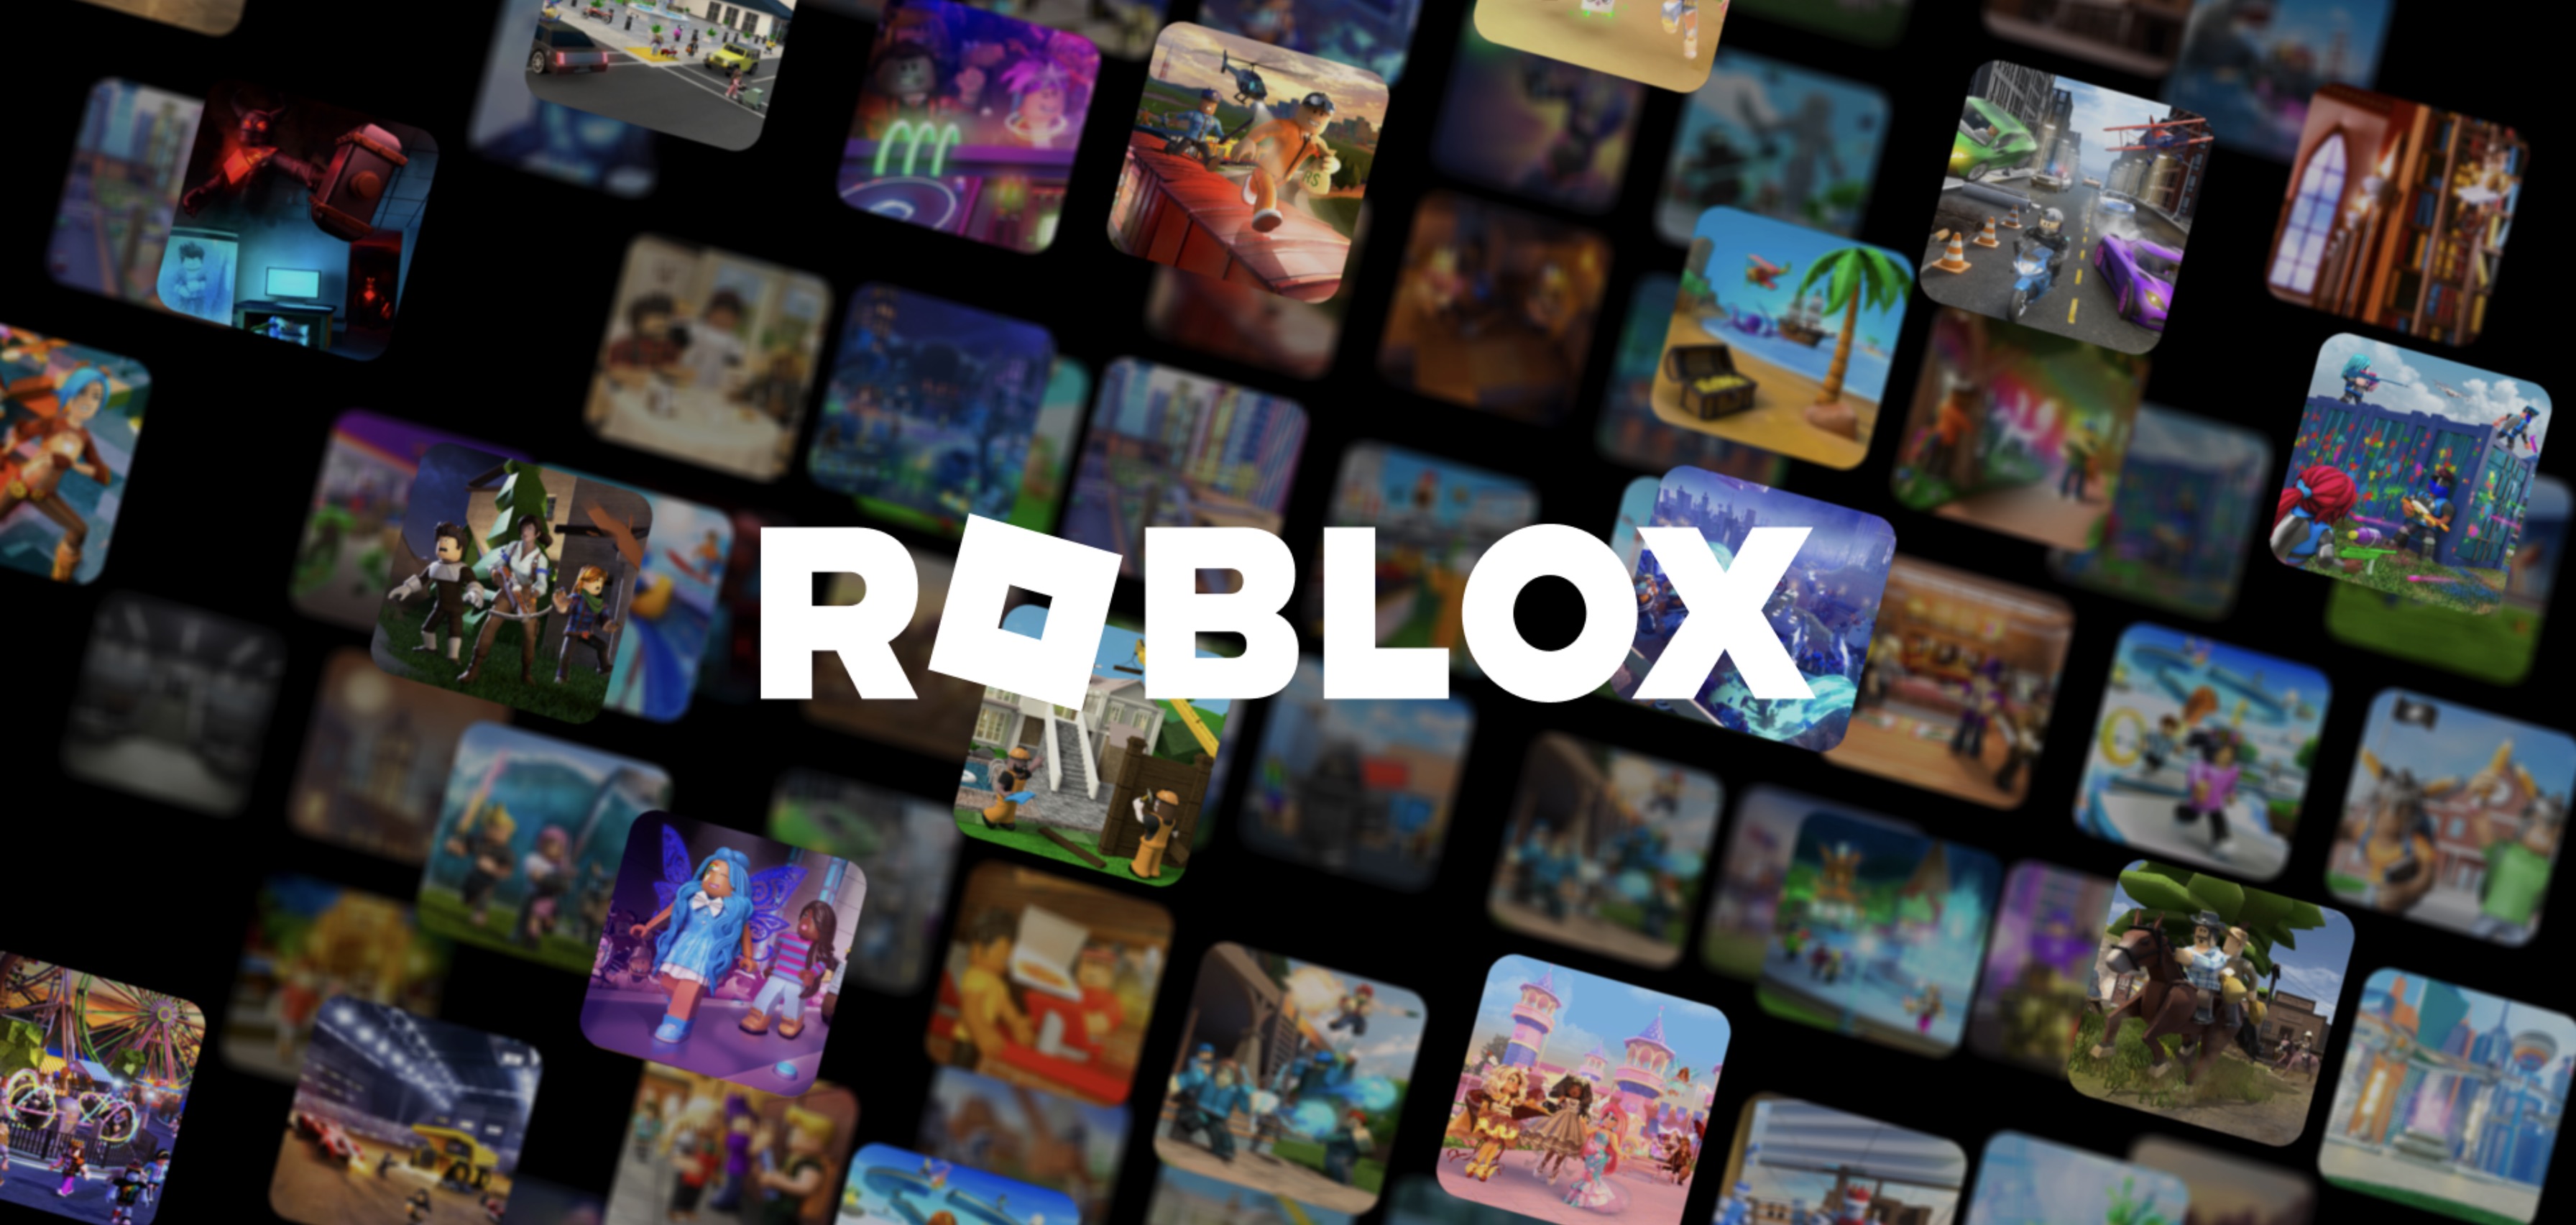 80 Robux - Roblox - DFG